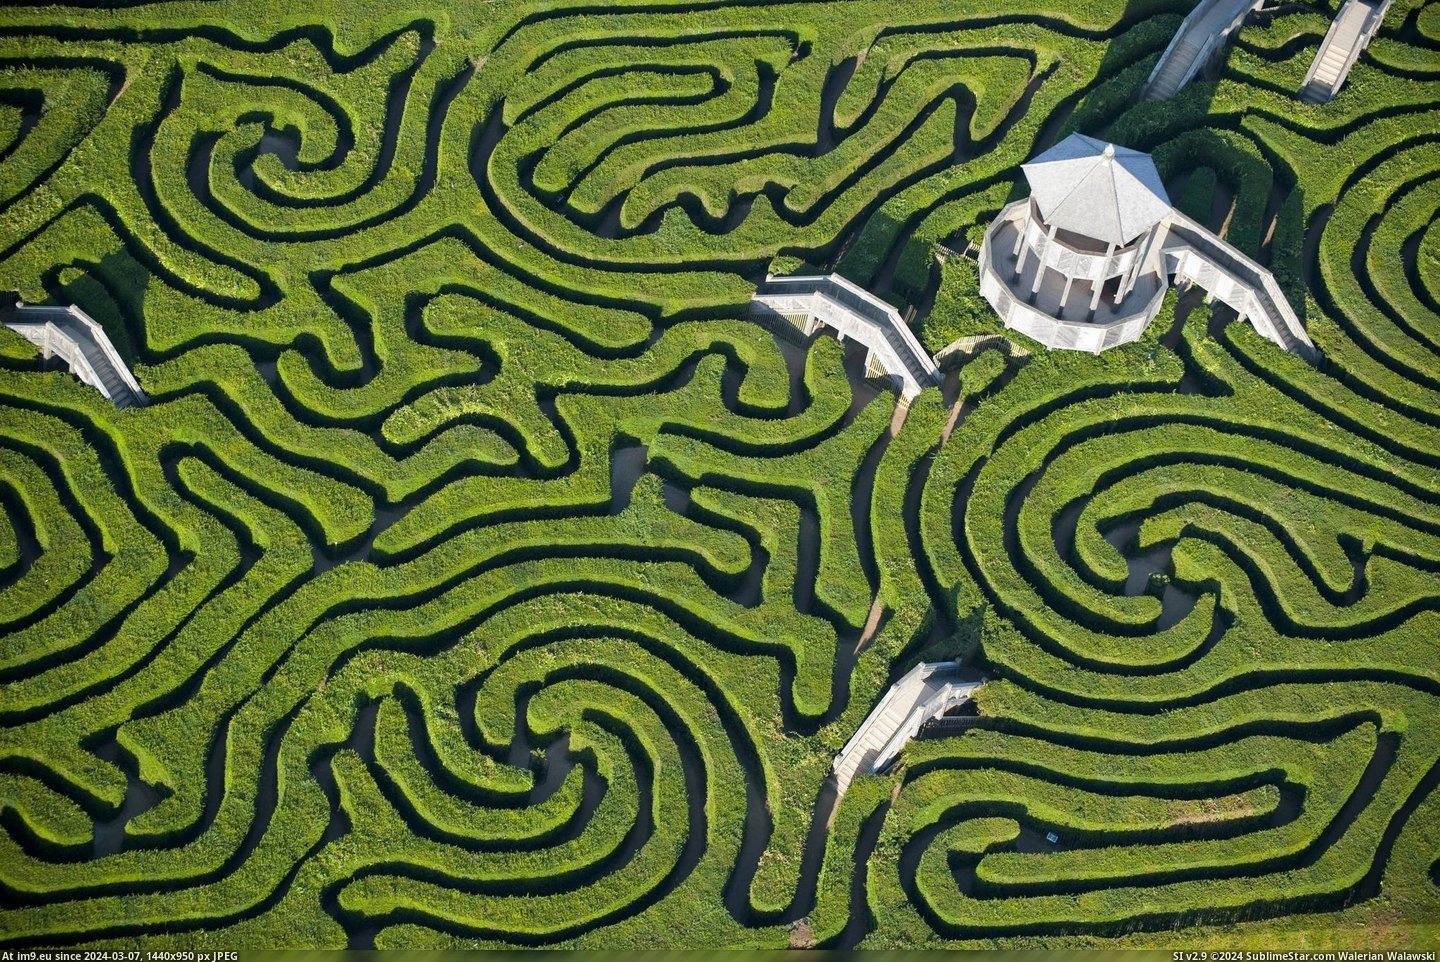 #England #Longleat #Maze [Pics] Maze at Longleat, England Pic. (Изображение из альбом My r/PICS favs))